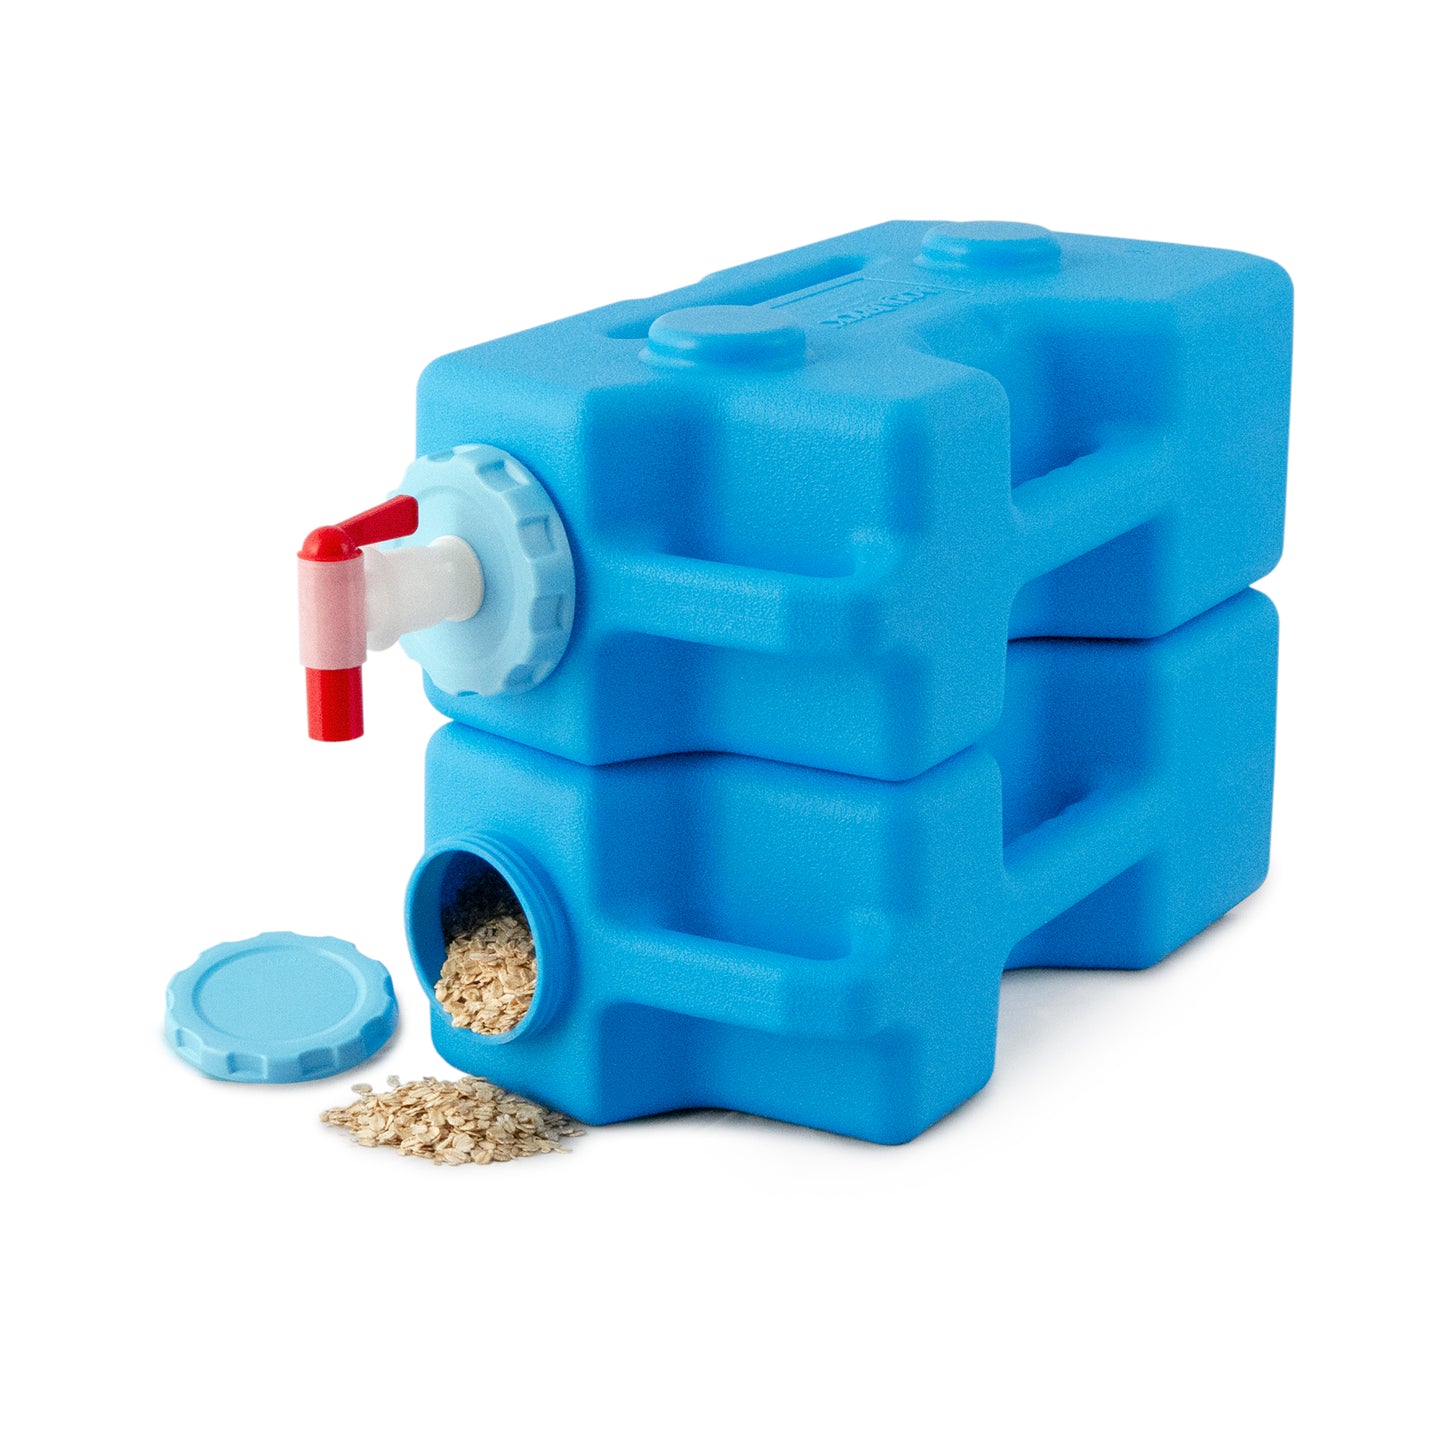 Saganlife 6 pack - AquaBrick Container w/Spigot